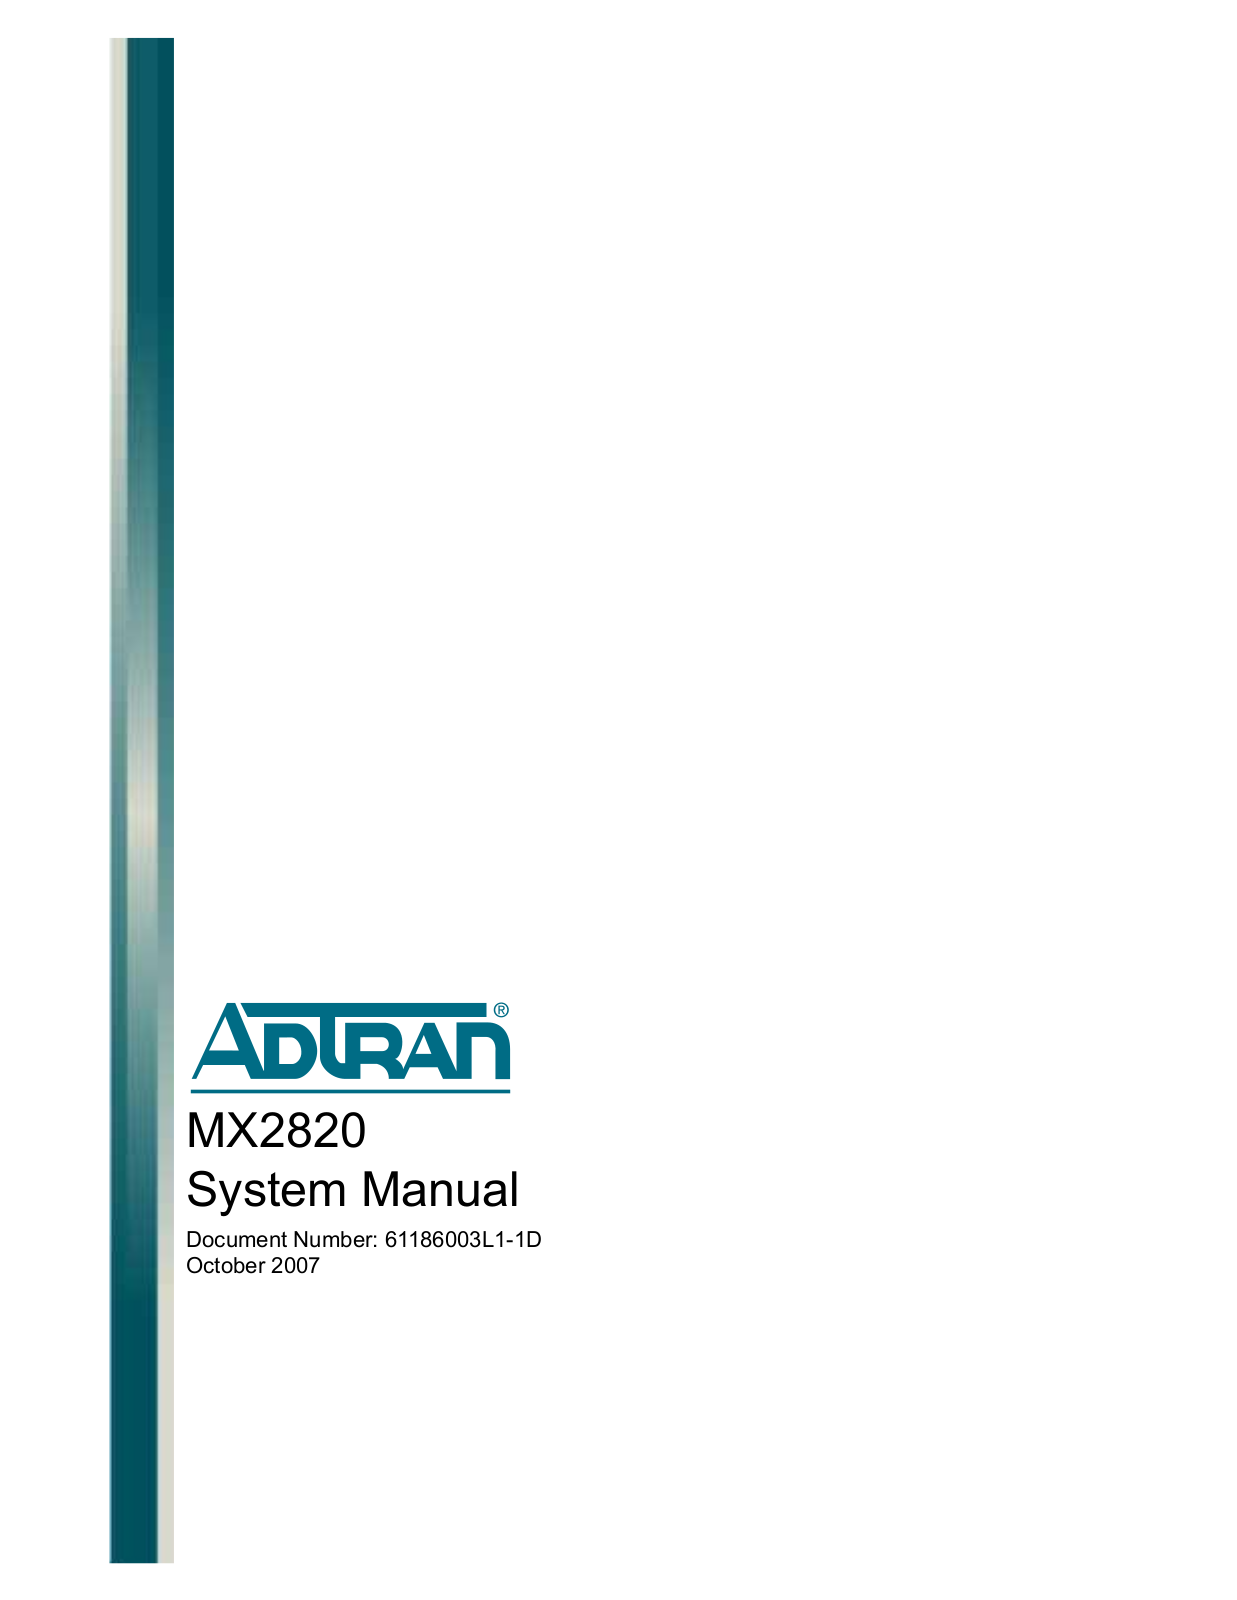 ADTRAN MX2820 System Manual